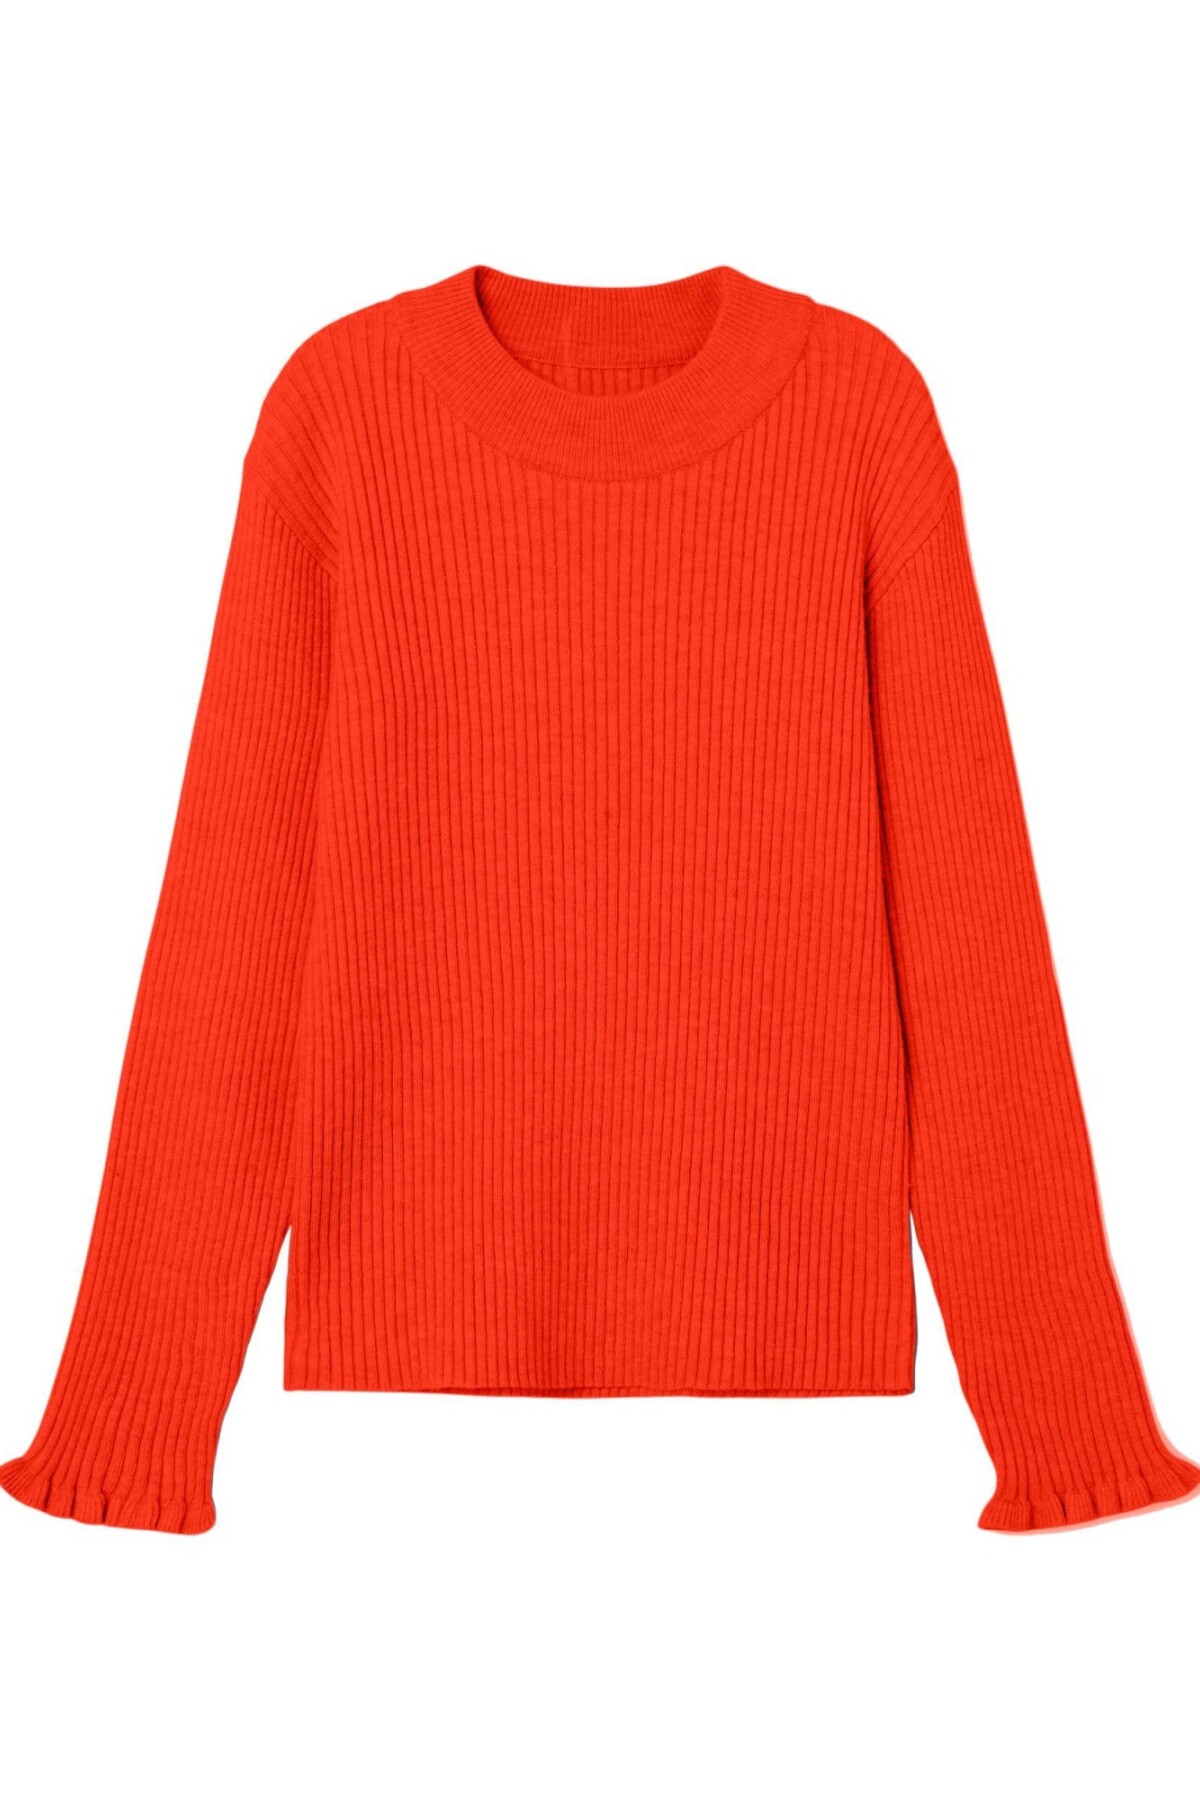 Sweater Vianna Cherry Tomato